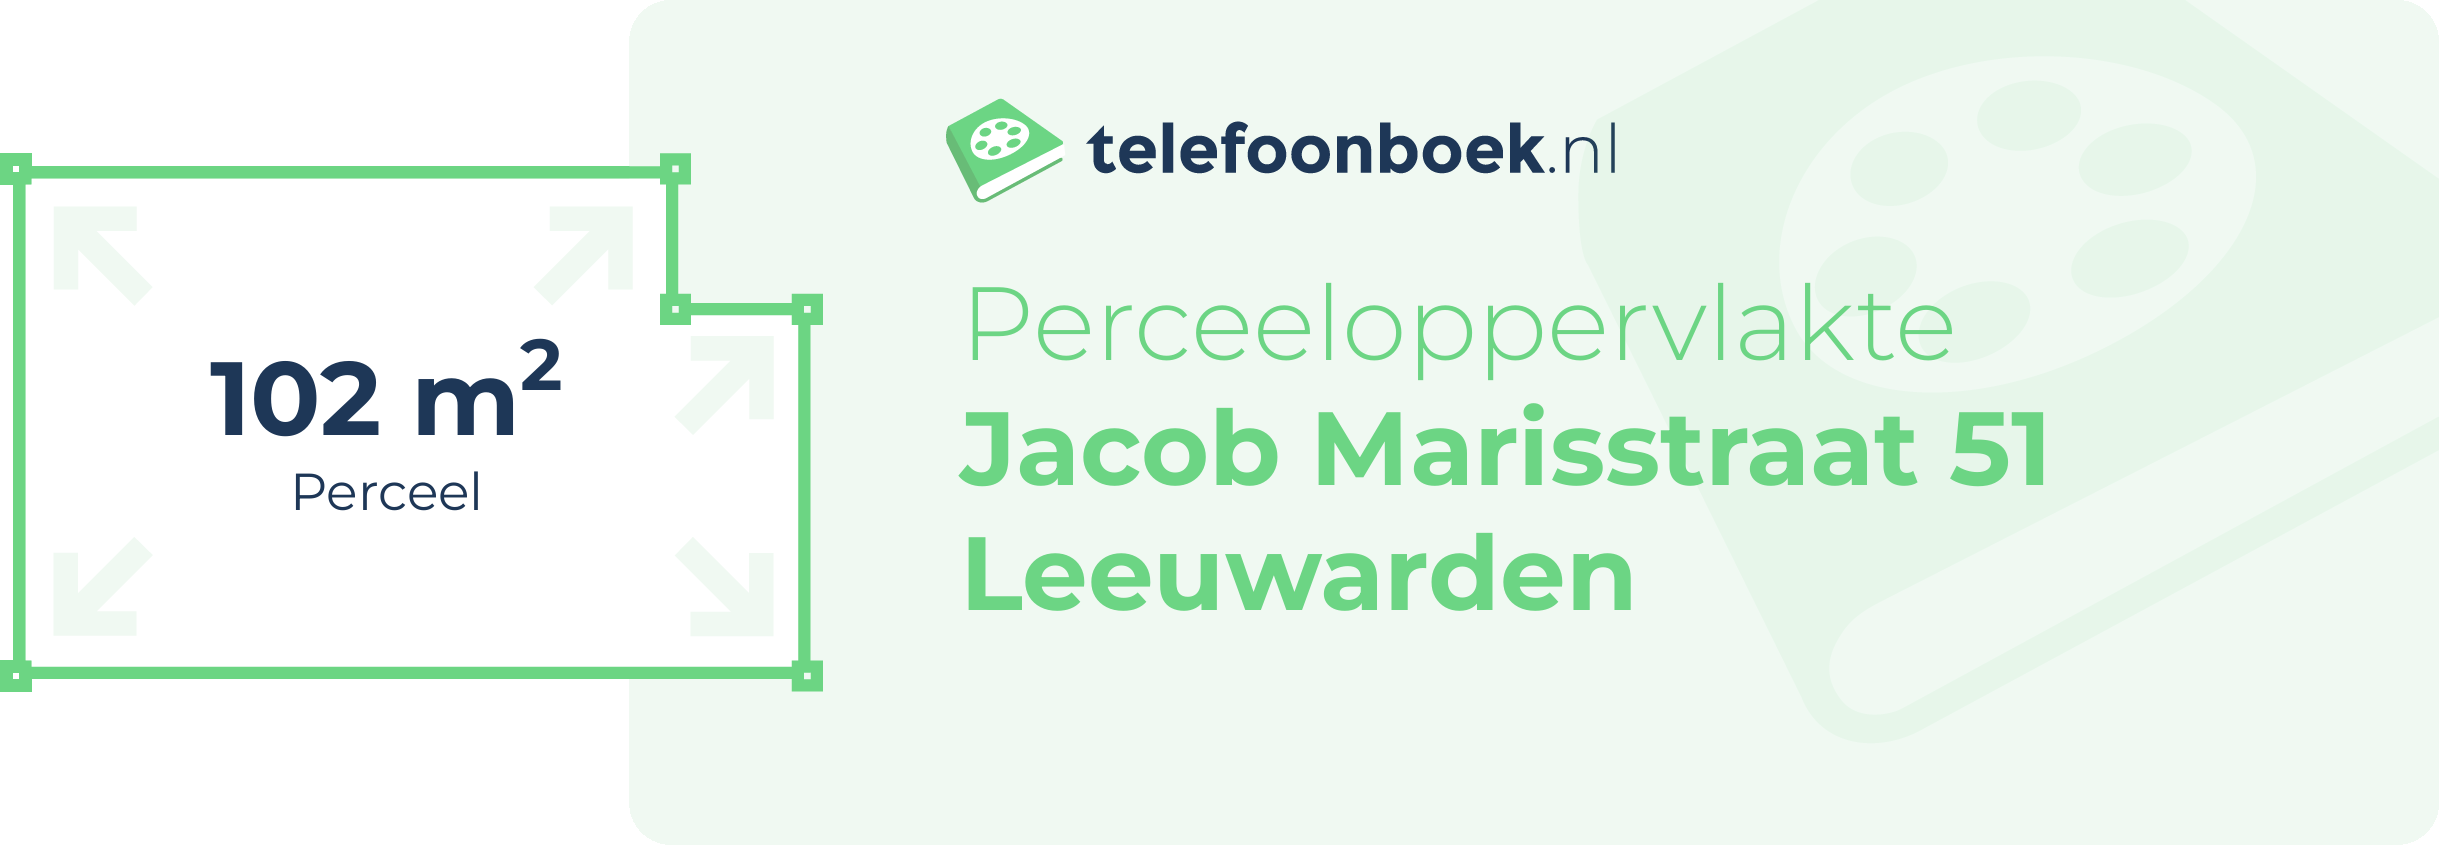 Perceeloppervlakte Jacob Marisstraat 51 Leeuwarden